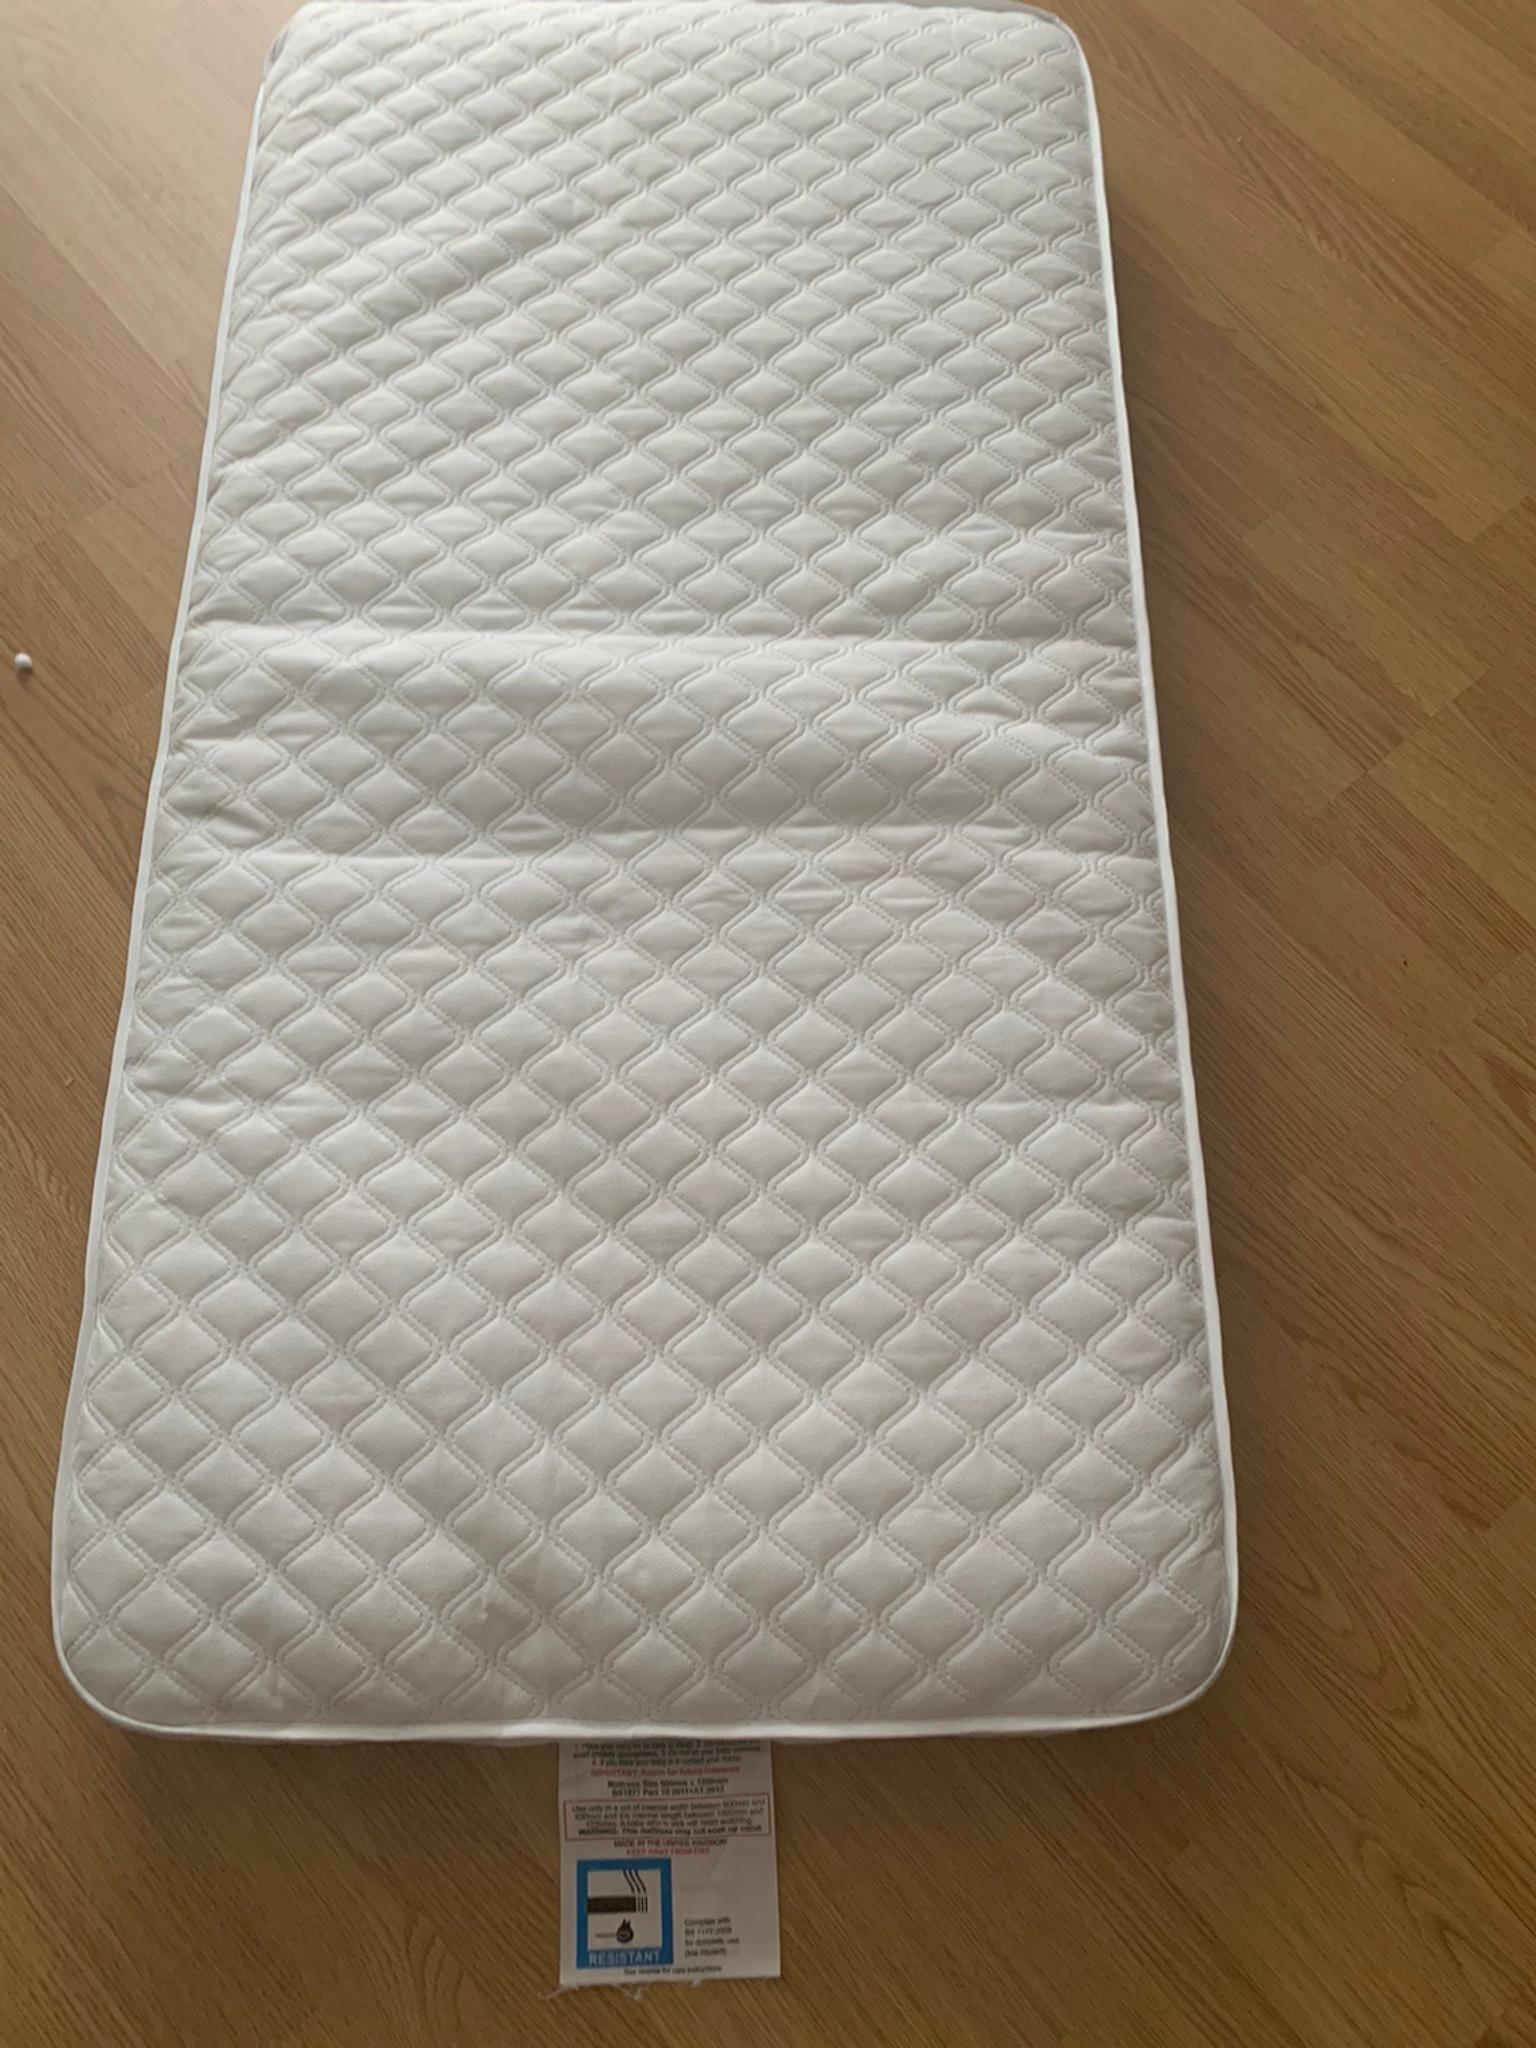 kiddicare mattress